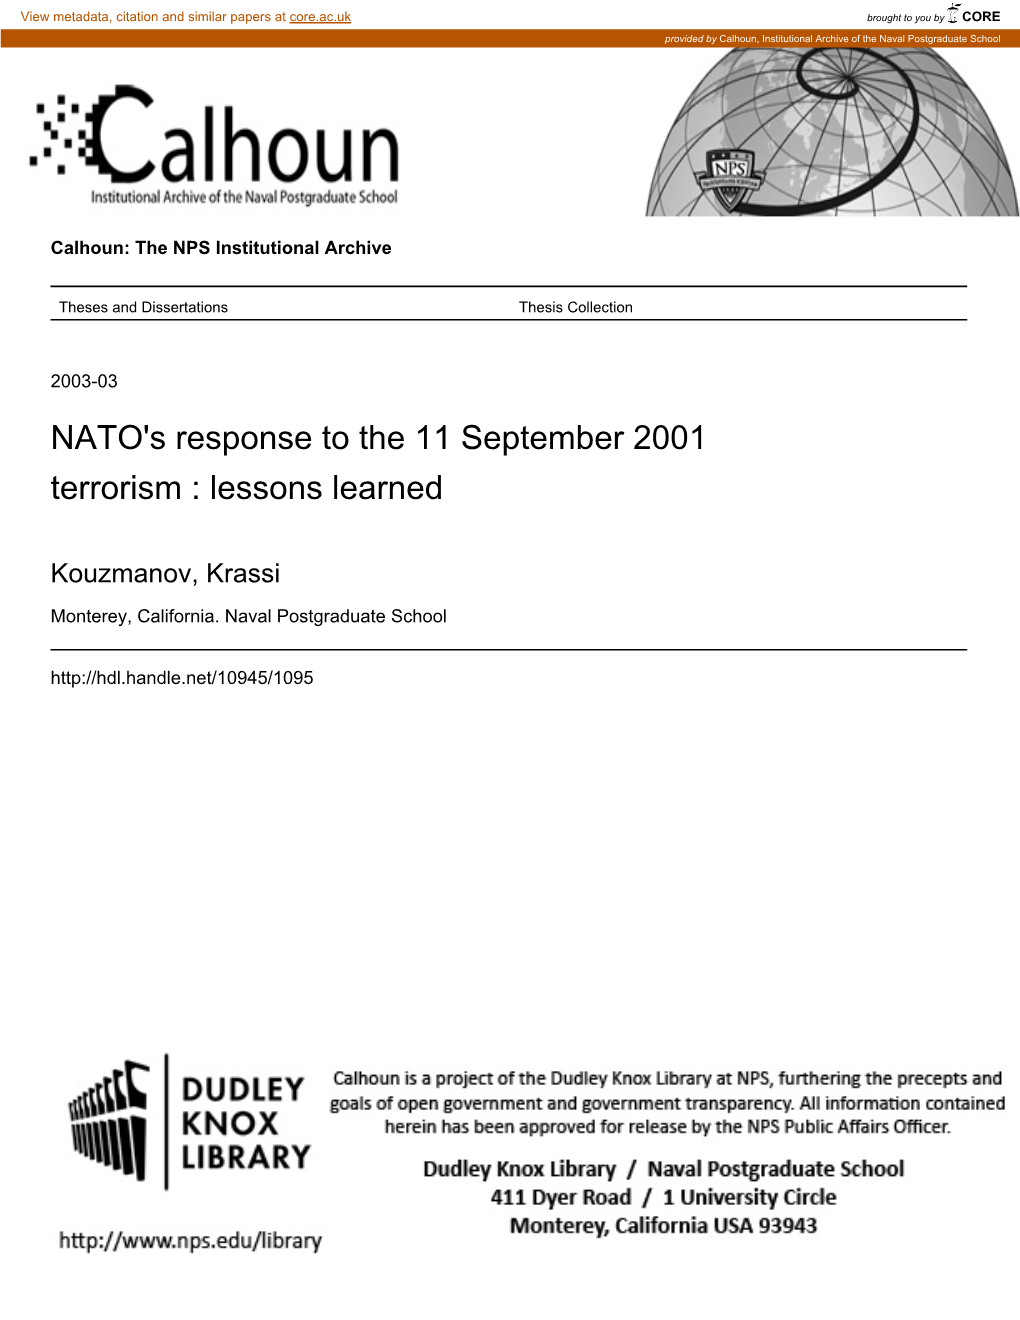 NATO's Response to the 11 September 2001 Terrorism : Lessons Learned